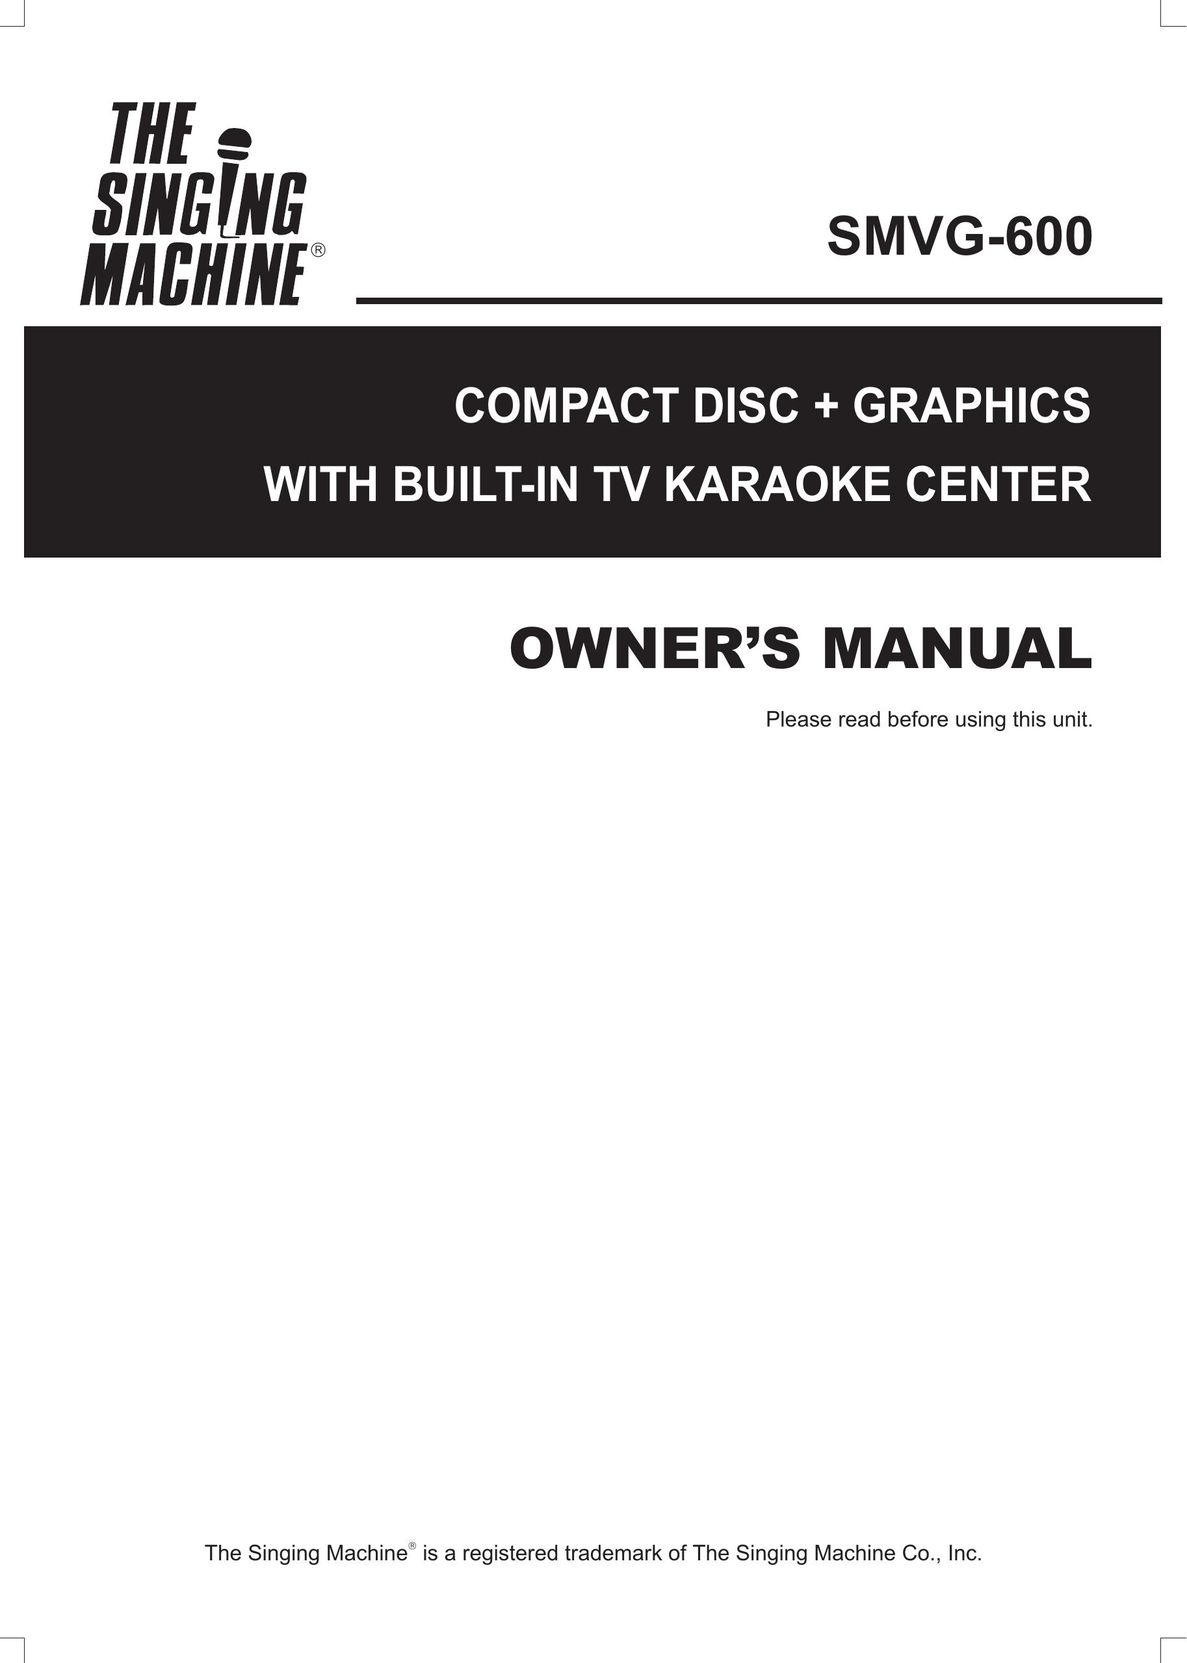 The Singing Machine SMVG-600 CD Player User Manual